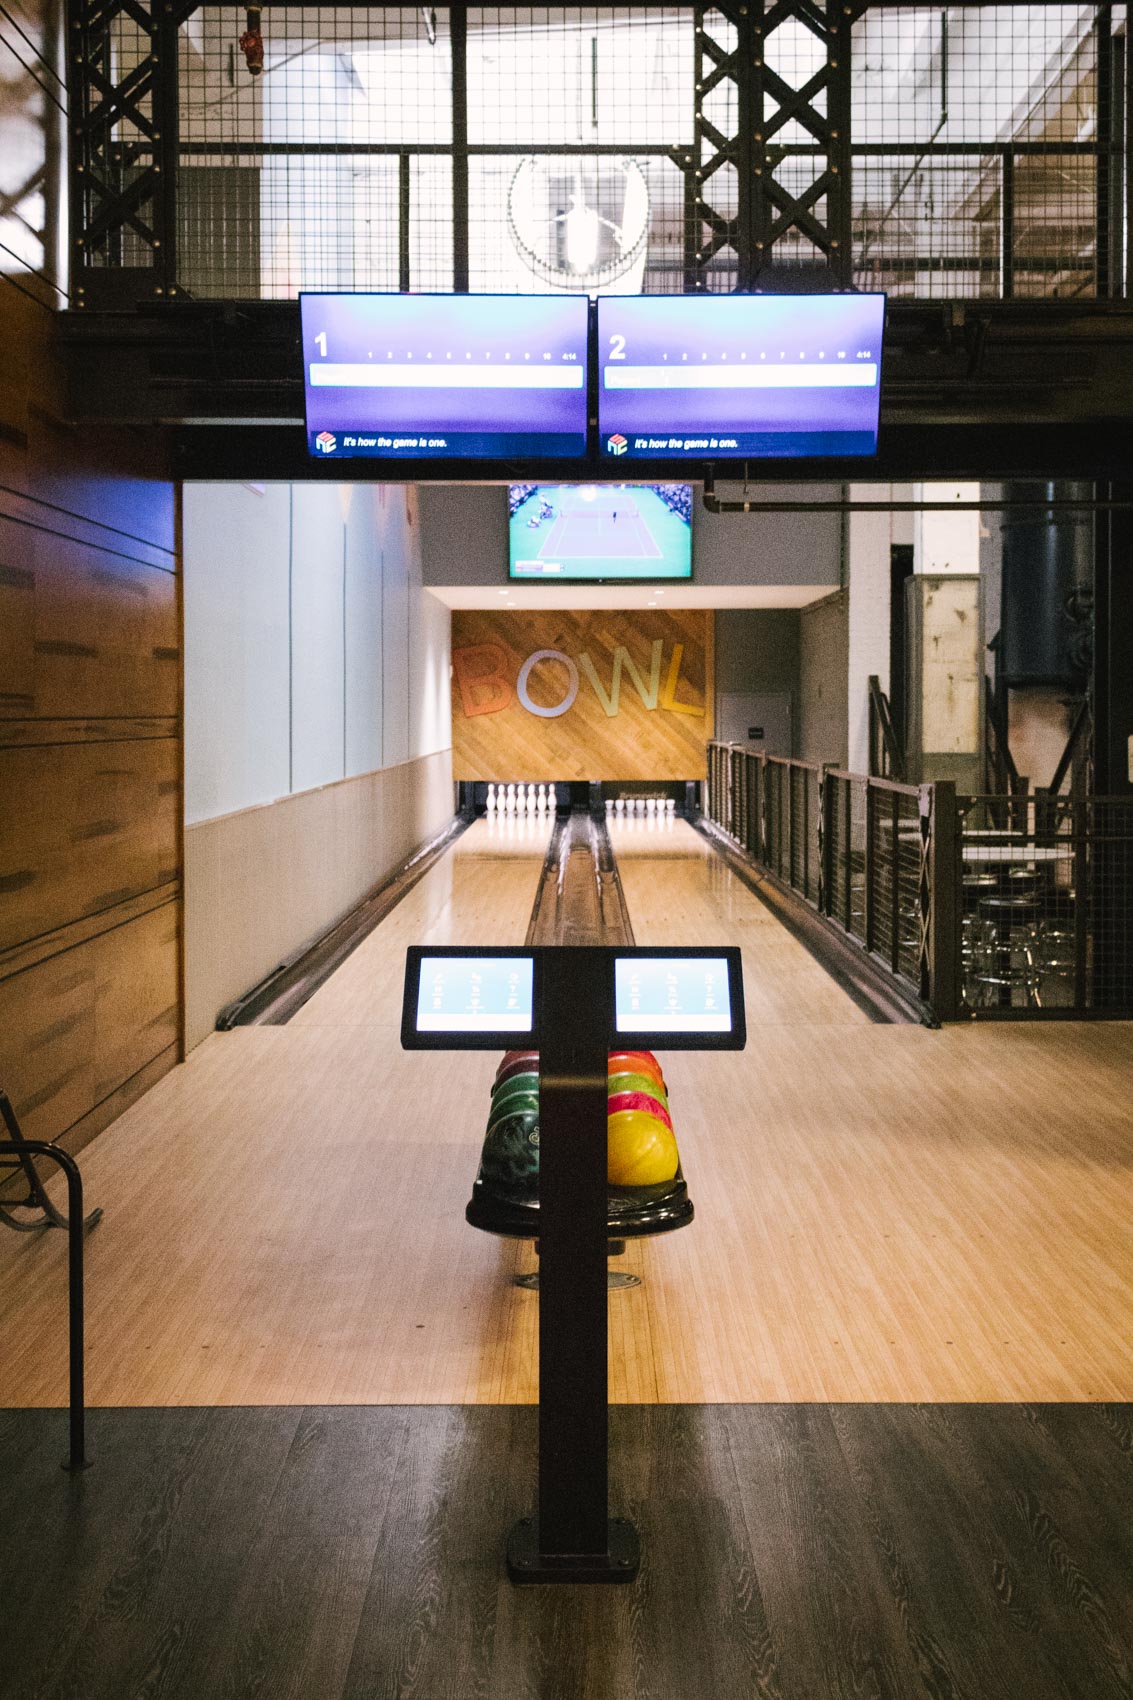 Bowling in the Recreation Room at Kimpton Cardinal Hotel | Winston-Salem, North Carolina